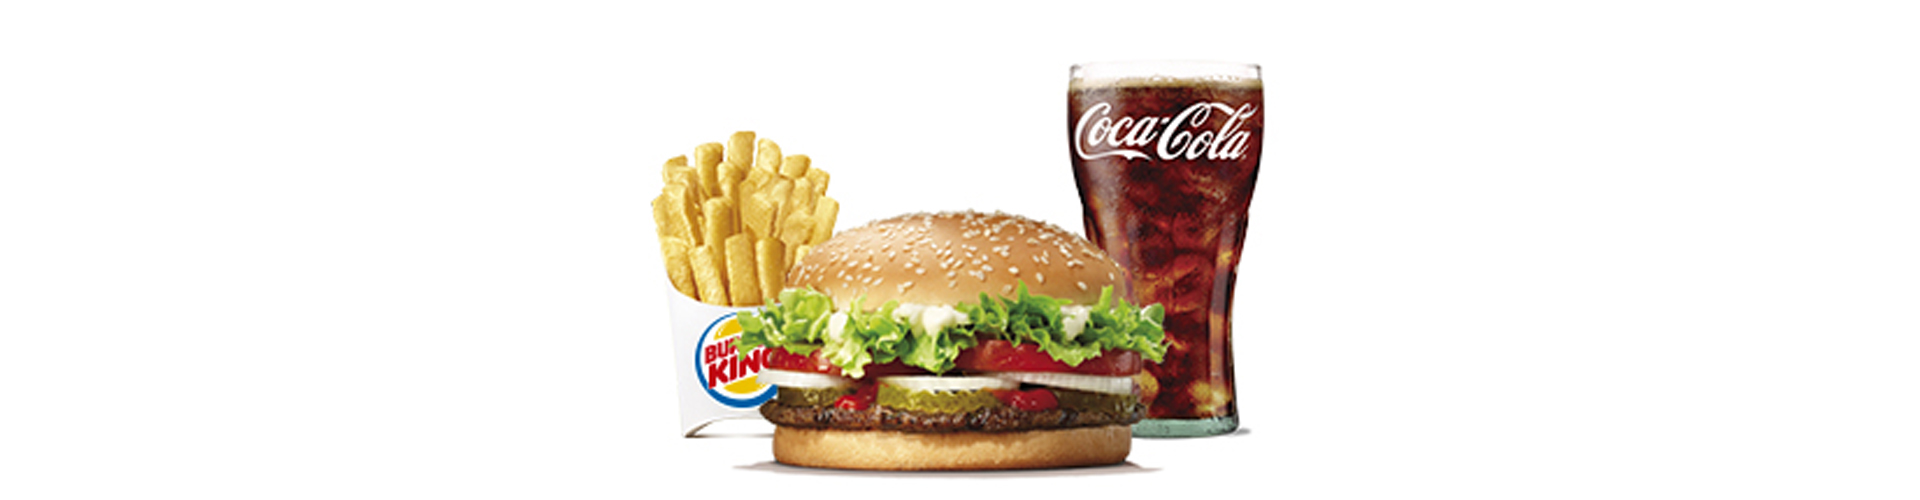 menu-whopper-burgerking-40001707-limonada-aros